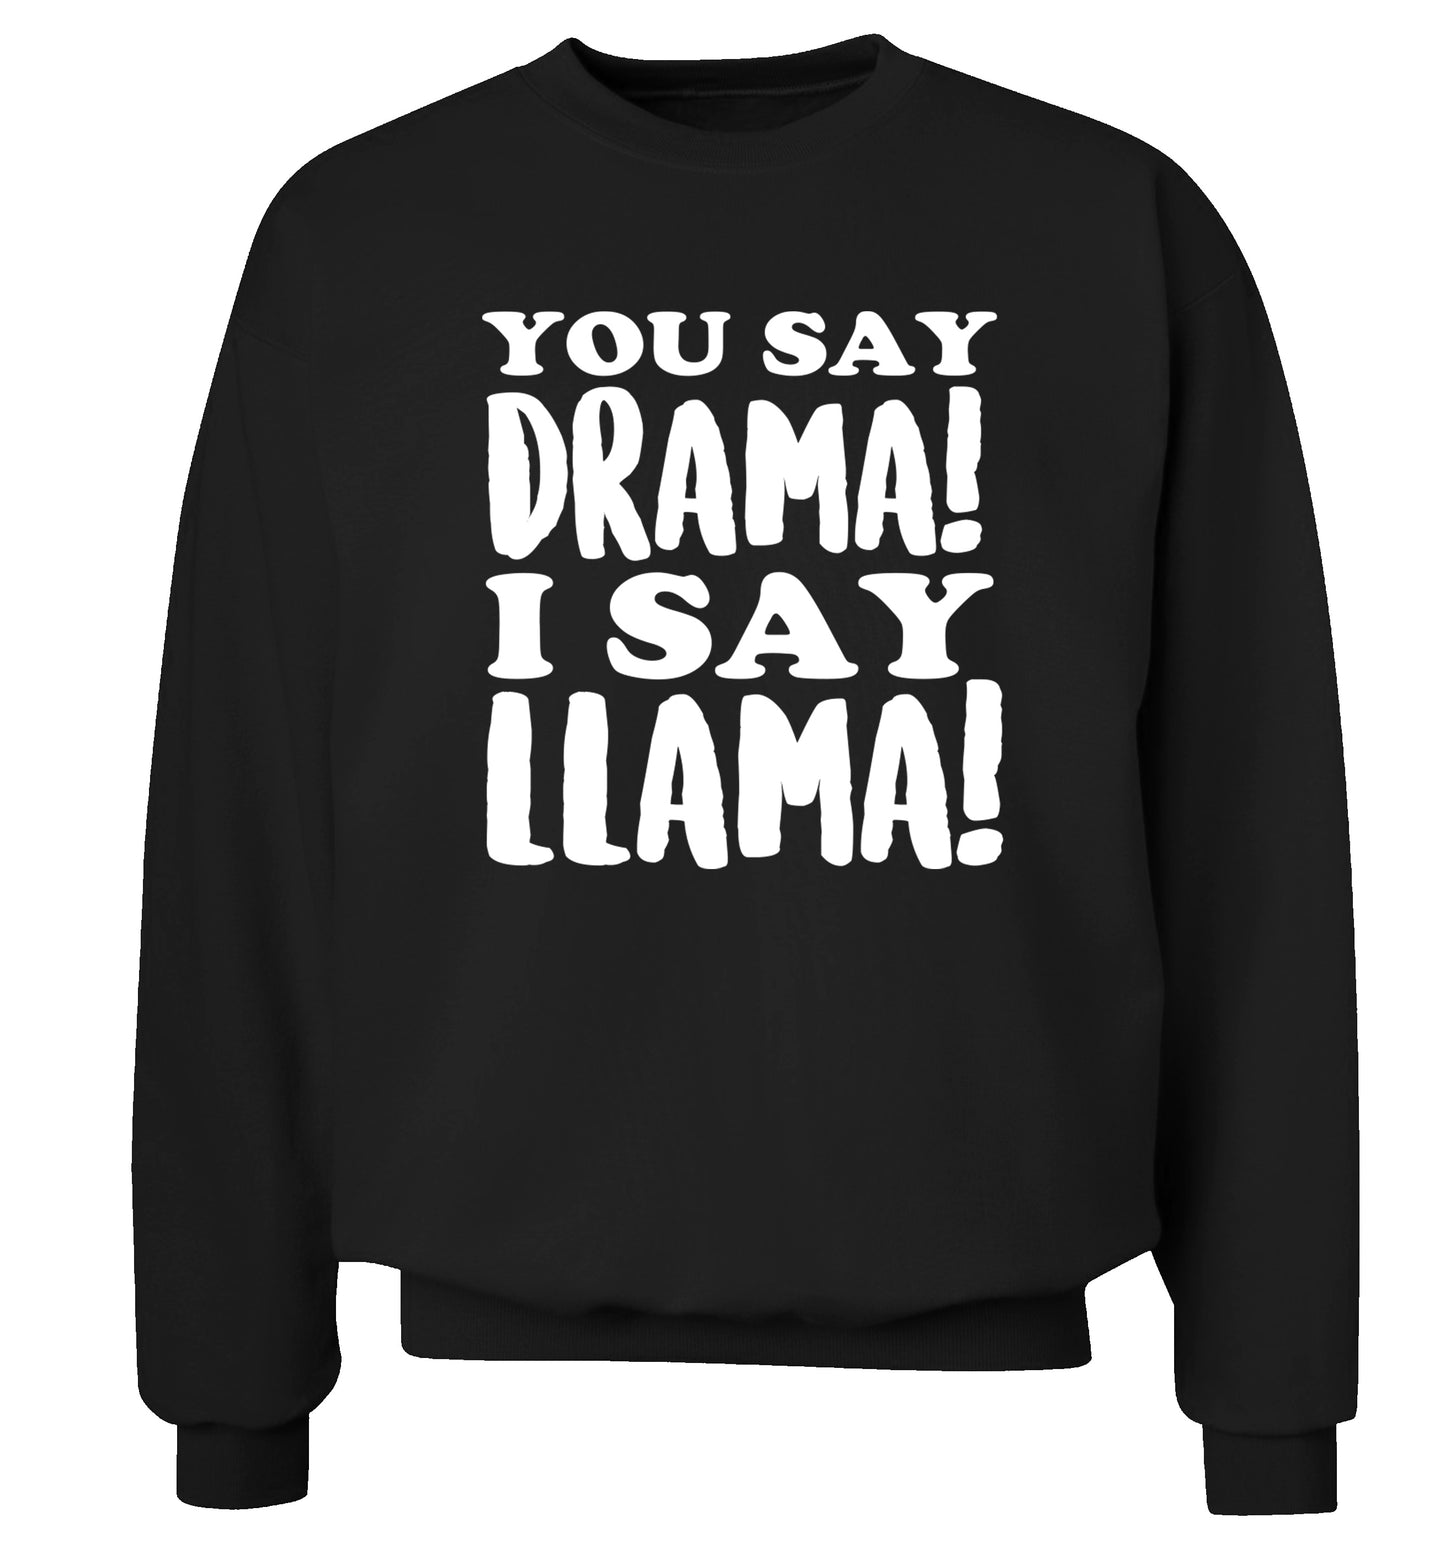 You say drama I say llama! Adult's unisex black Sweater 2XL